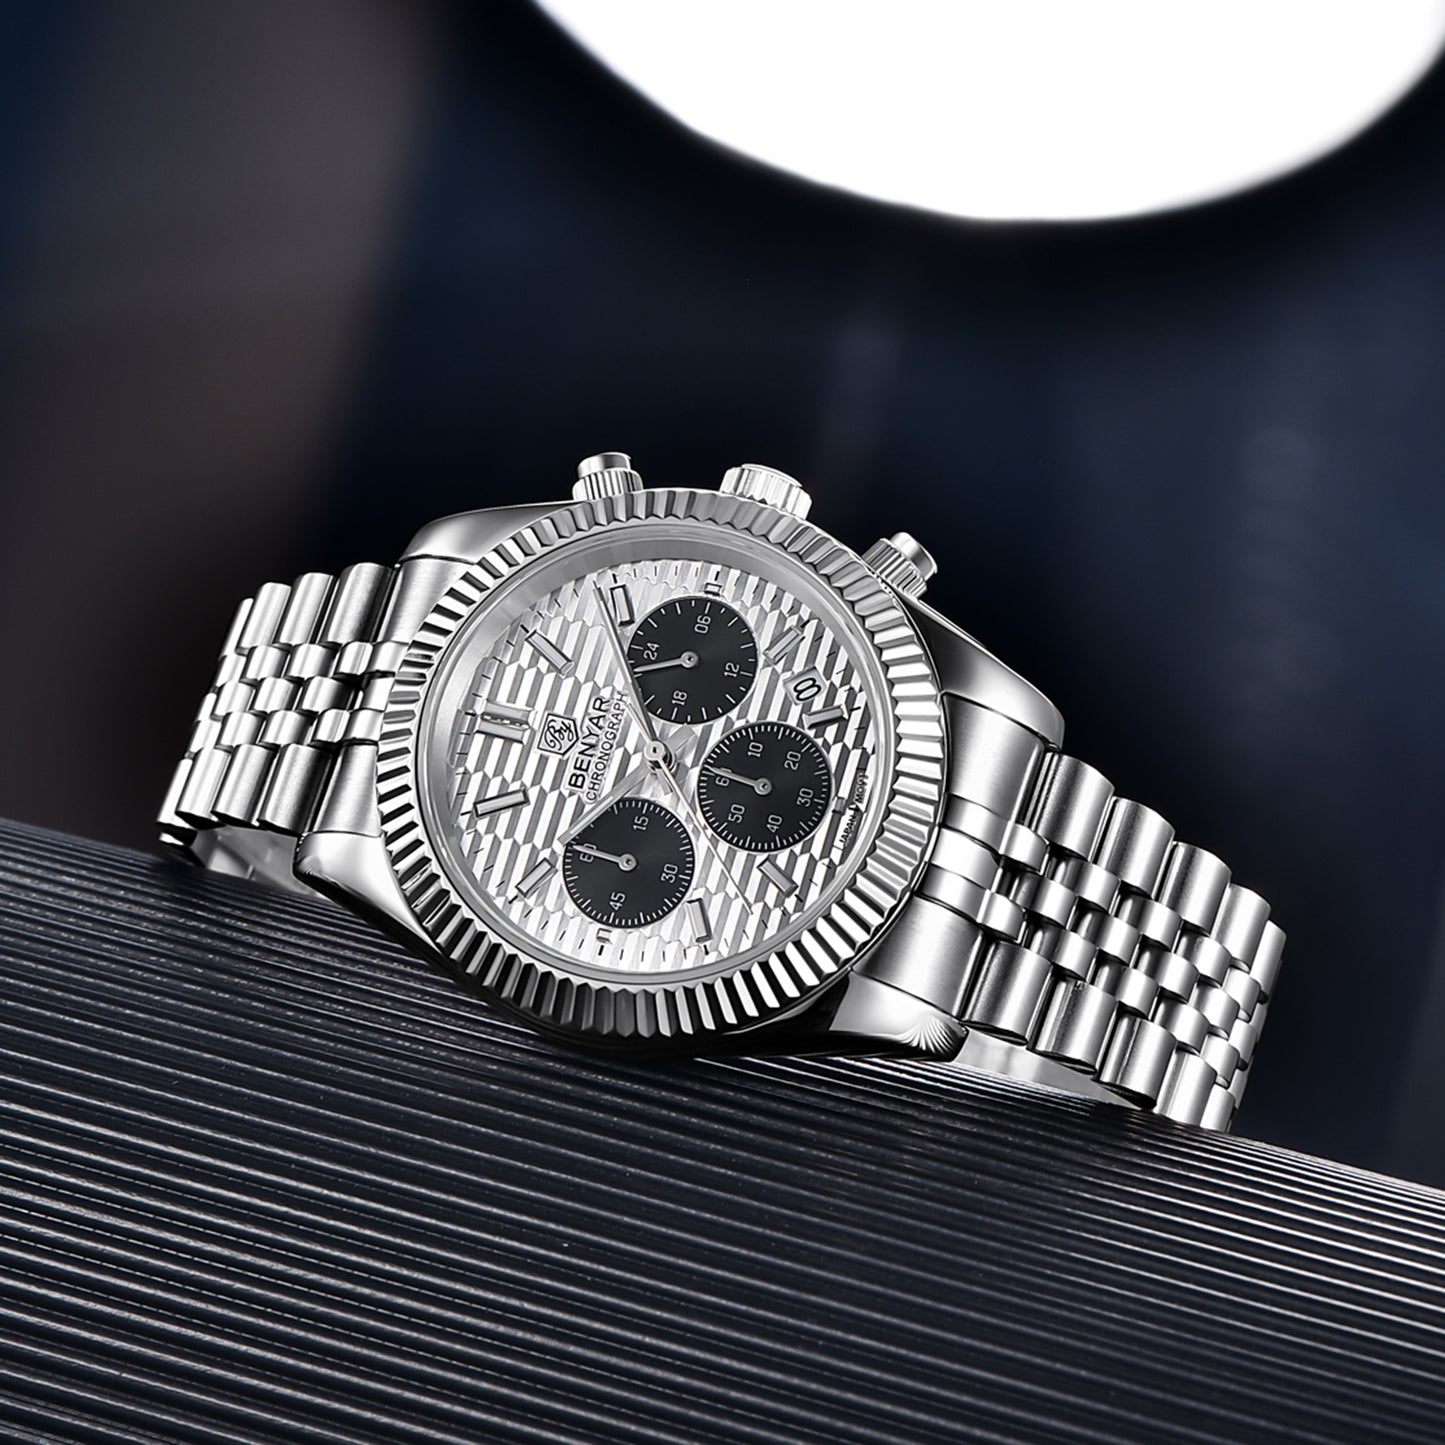 BENYAR BY S001 Men's Quartz Watches  Top Brand Luxury Waterproof Men 40.5MM Stainless Steel Sapphire  Chronograph Clock